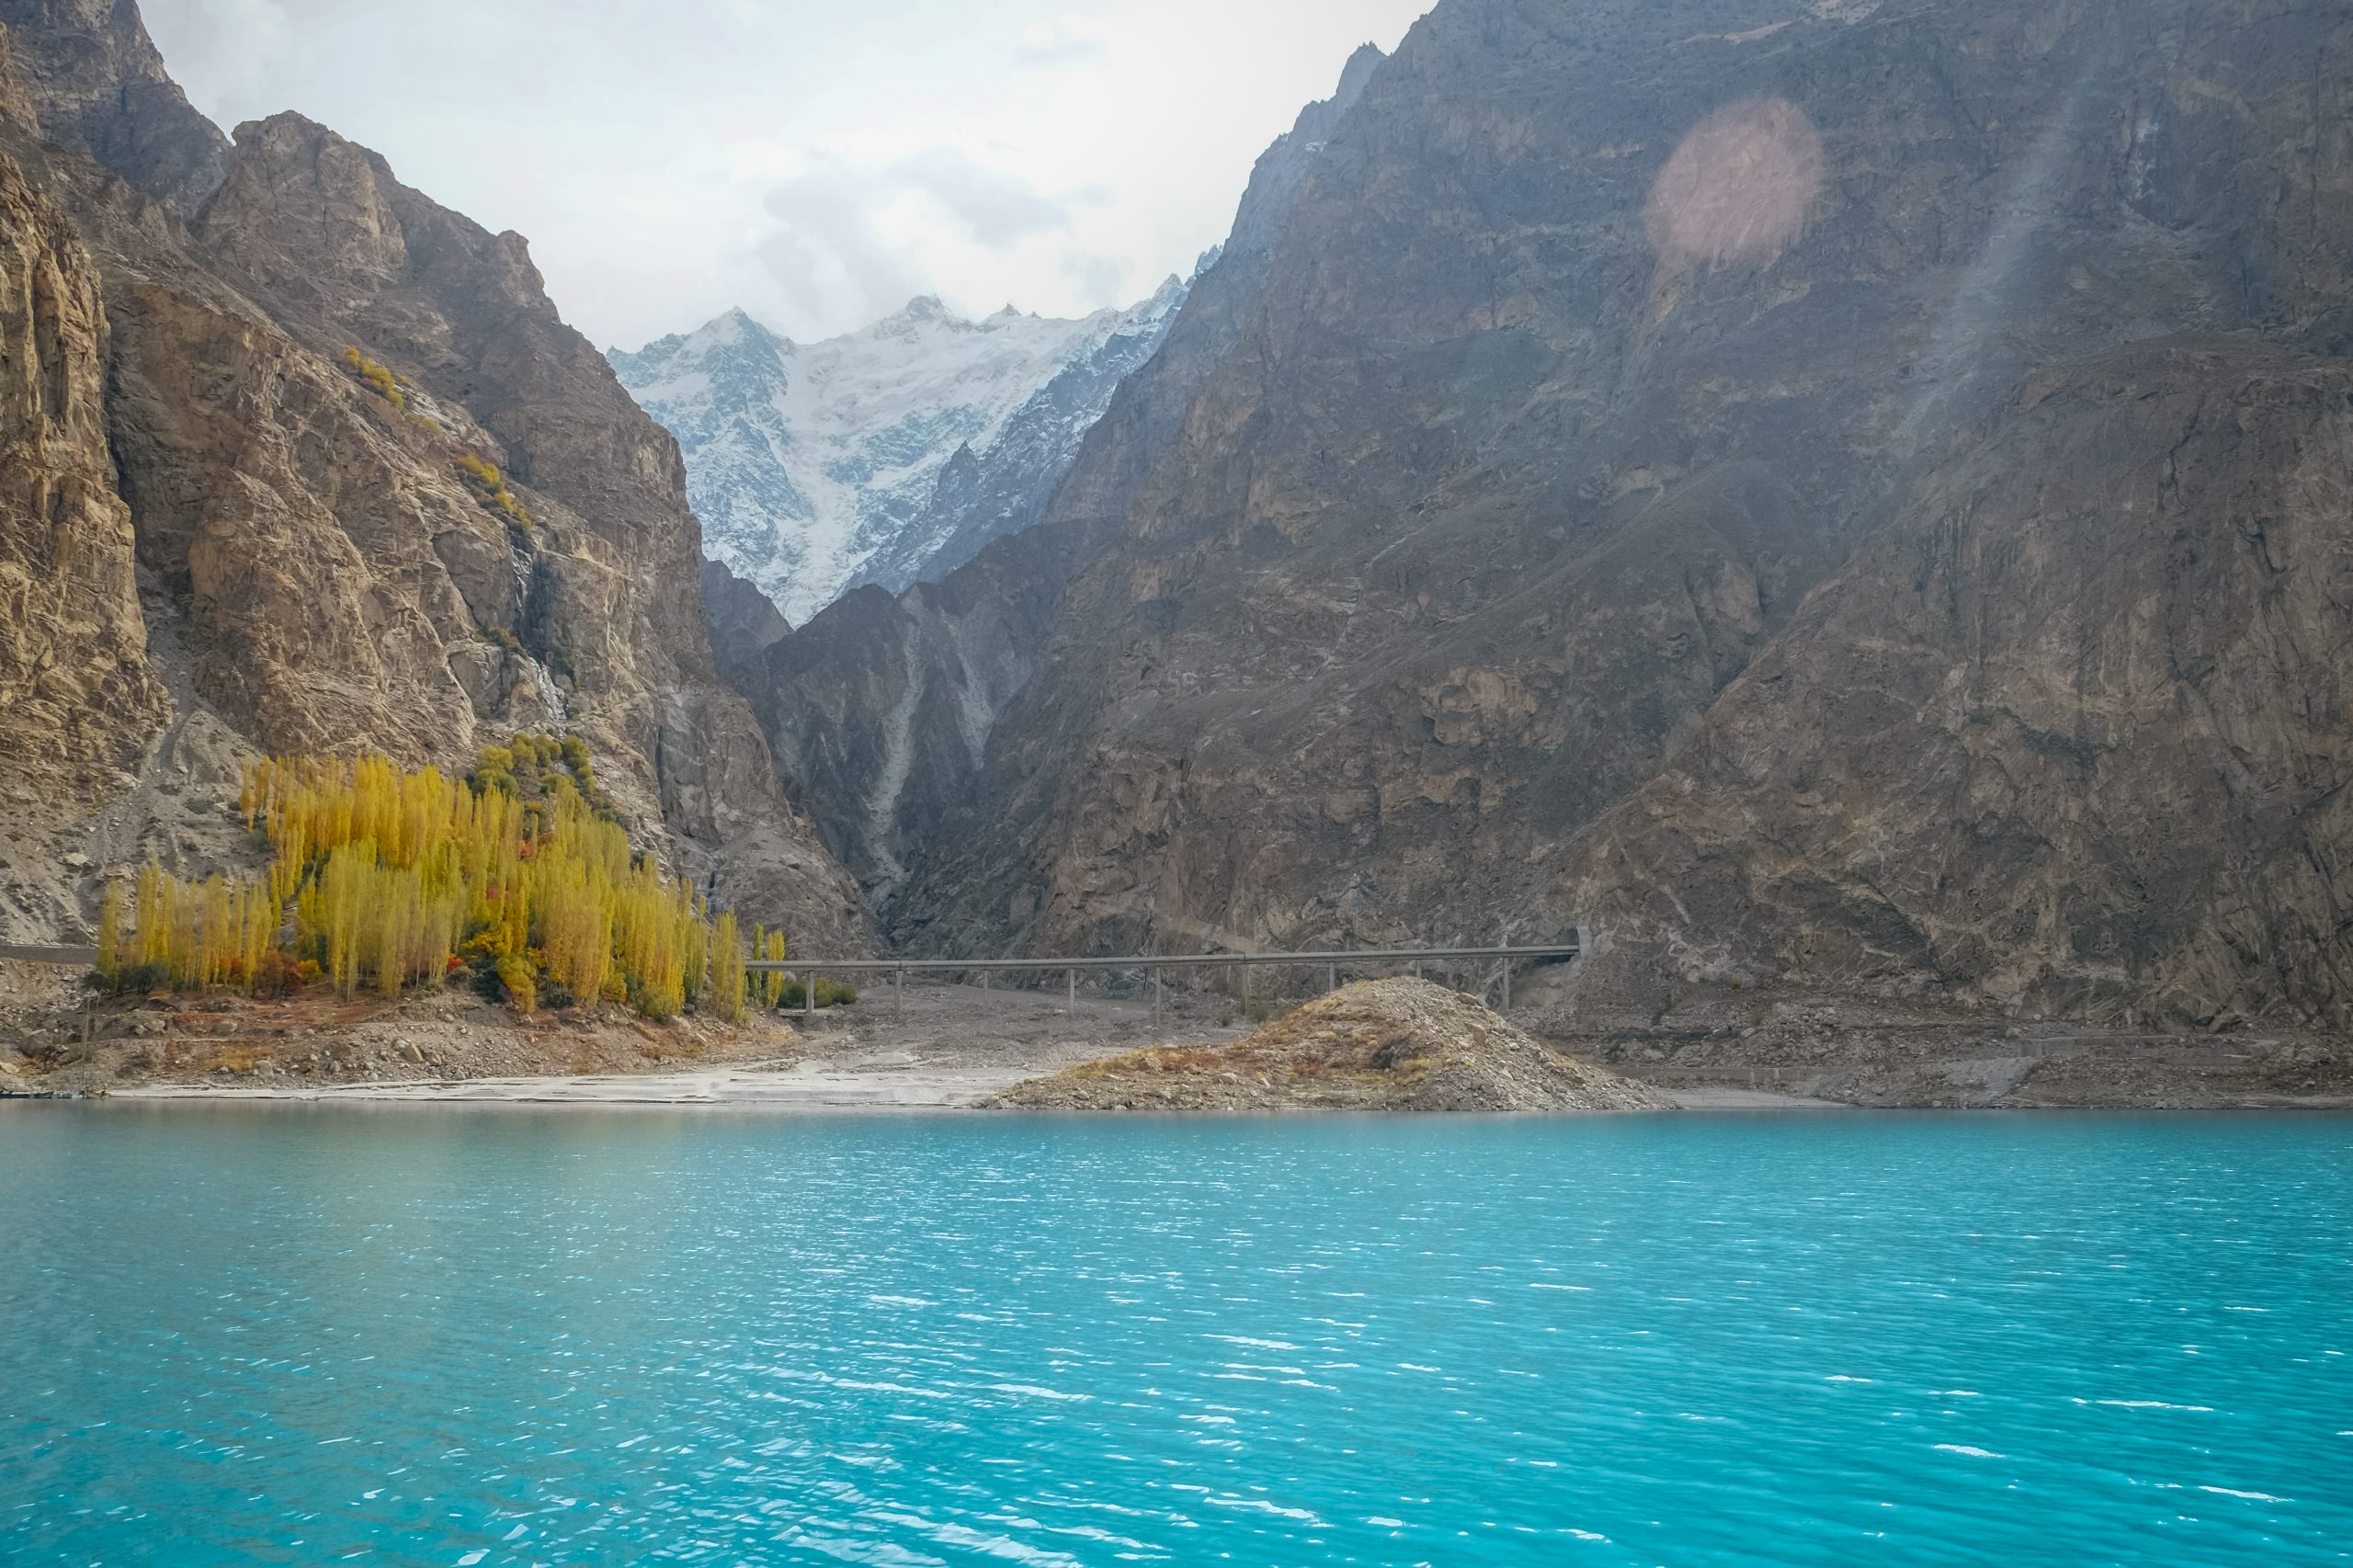 turquoise-water-attabad-lake-autumn-season-against-snow-capped-mountain-range-1